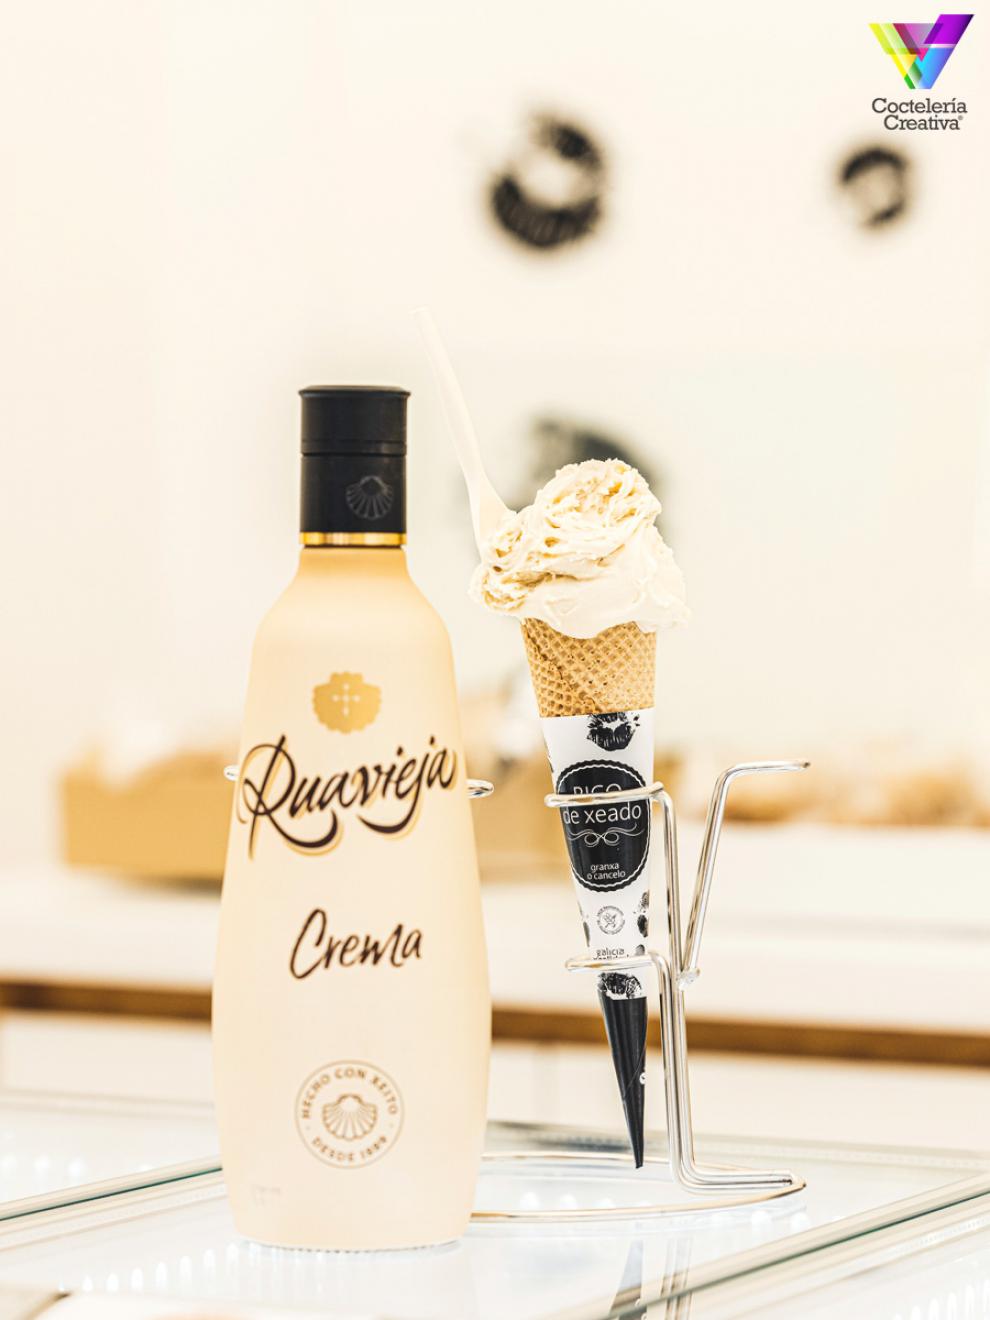 Botella de Ruavieja junto al helado de Crema de Ruavieja de Bico de Xeado 